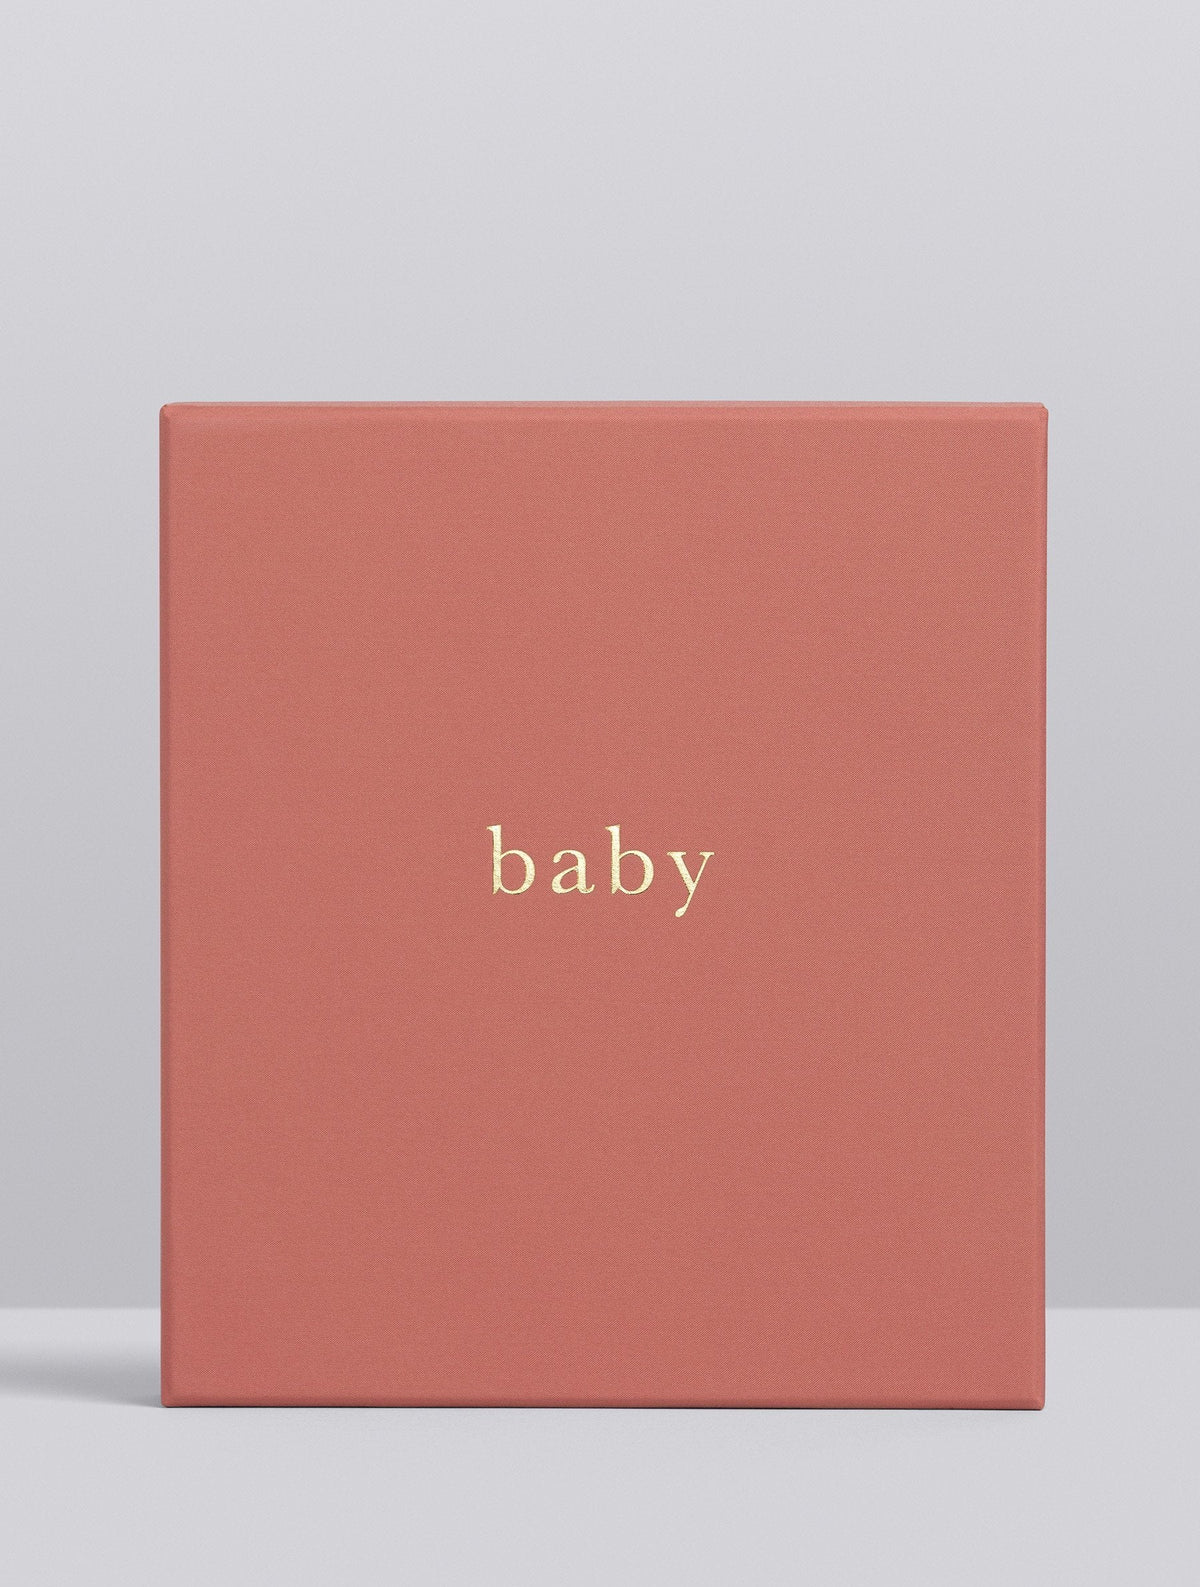 Baby Journal. Blush. Keep One Gift One Bundle